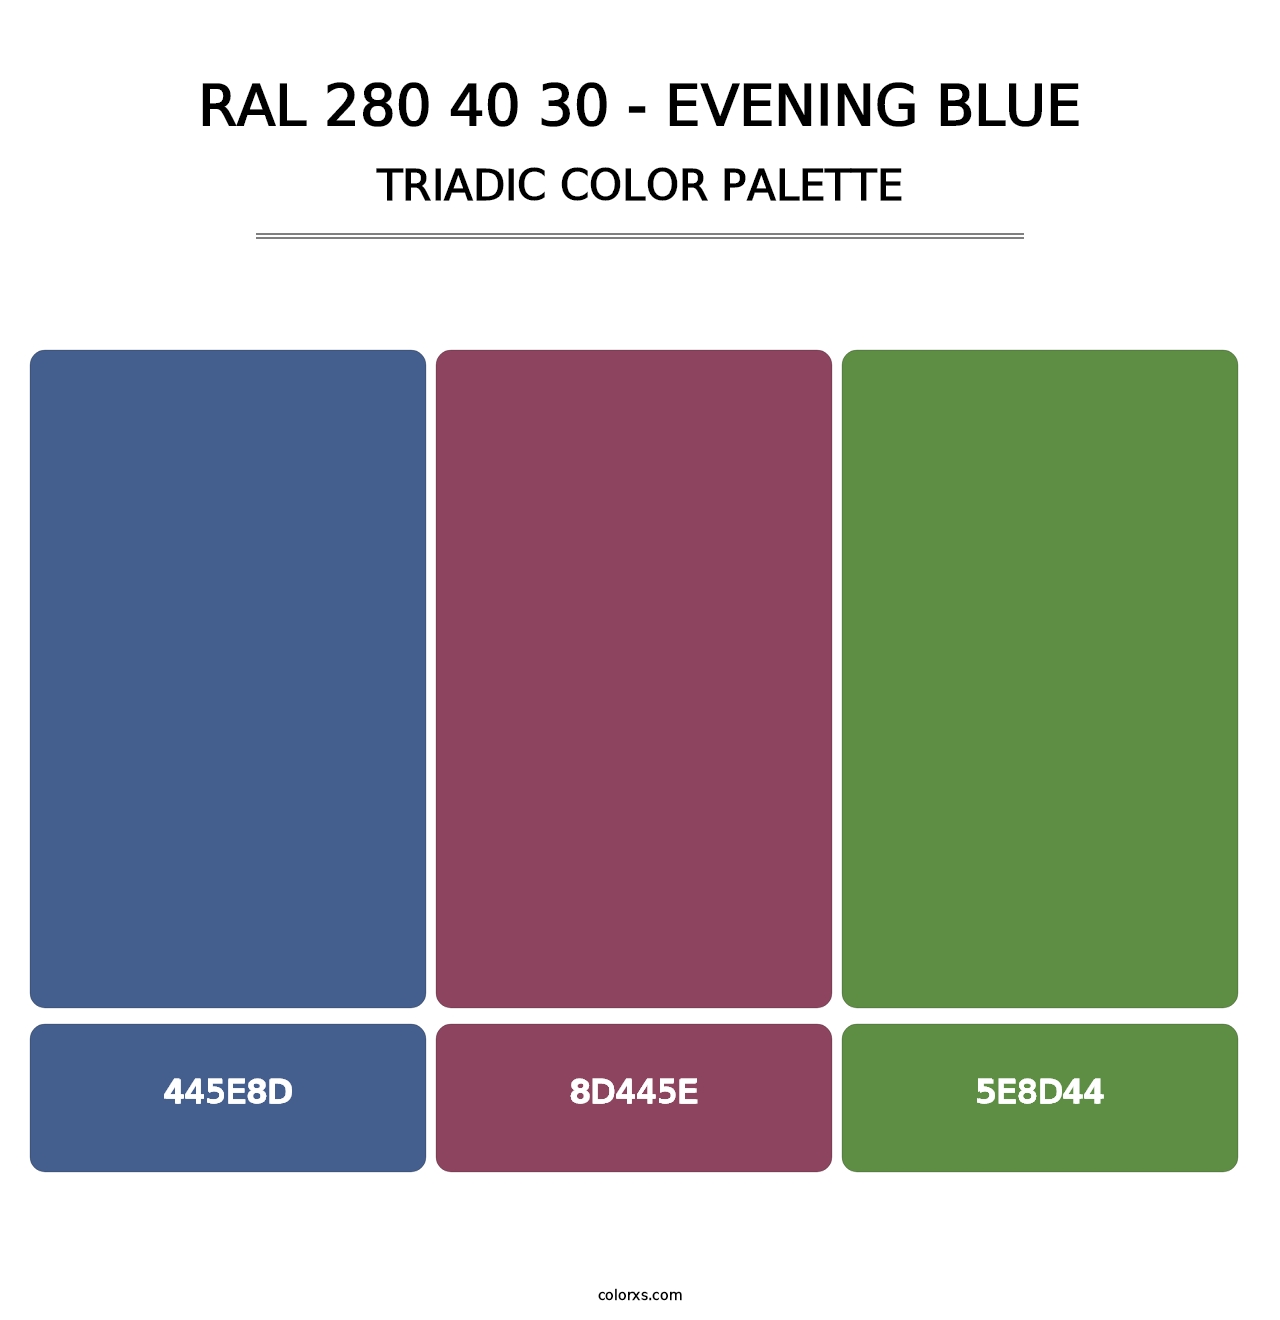 RAL 280 40 30 - Evening Blue - Triadic Color Palette